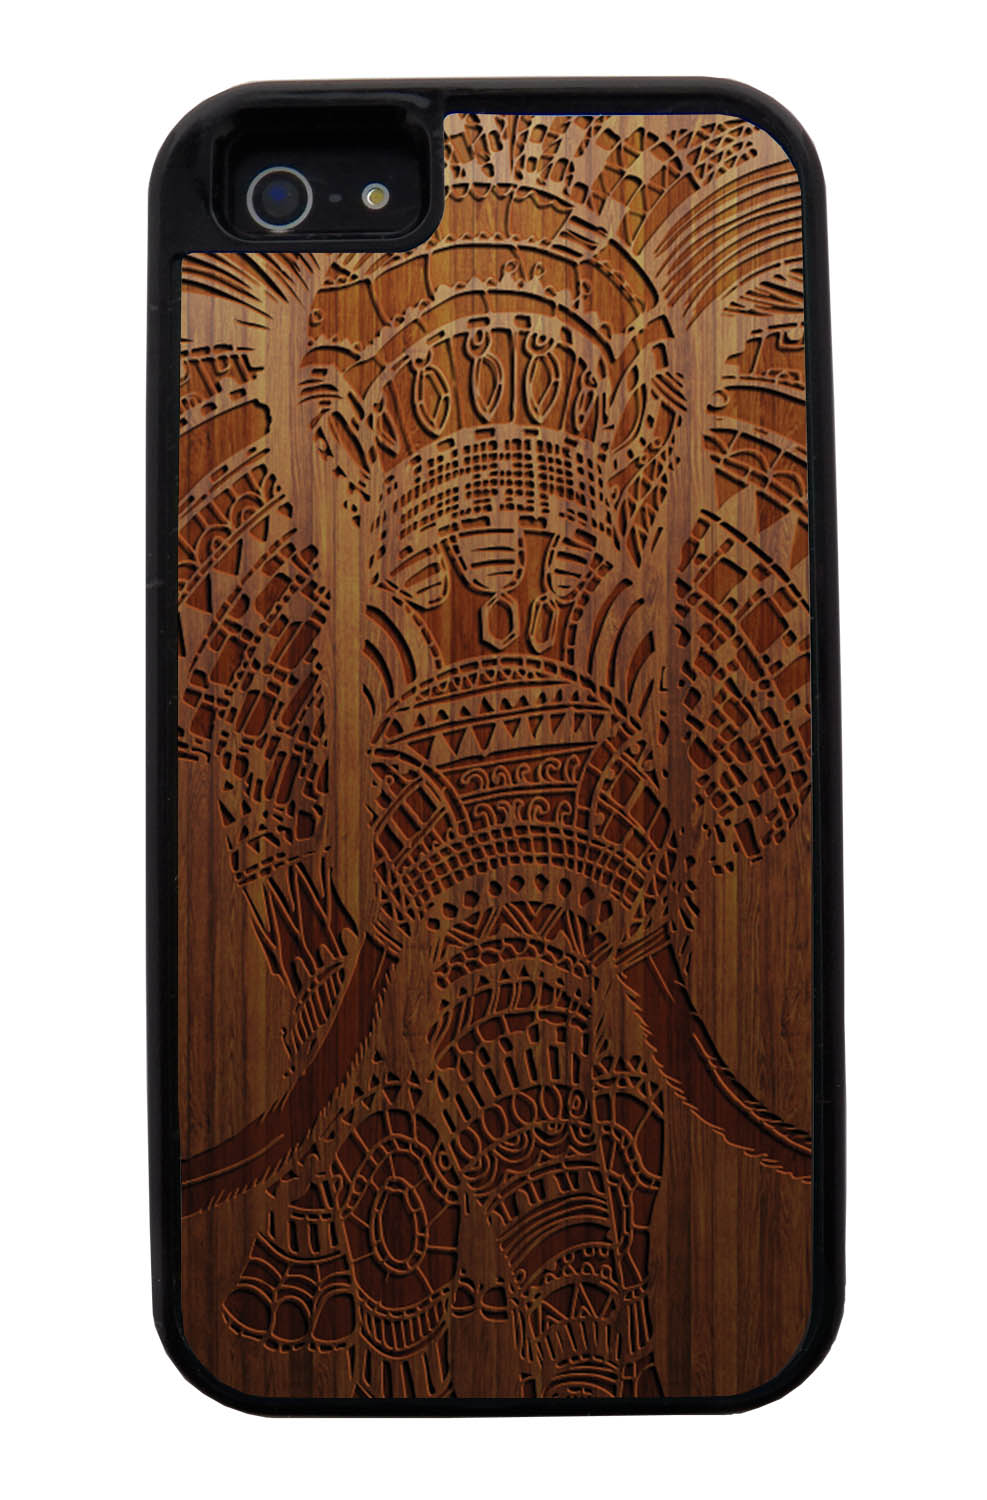 Apple iPhone 5 / 5S Aztec Case - Simulated Oak Wood Engraving - Tribal Elephant - Black Tough Hybrid Case